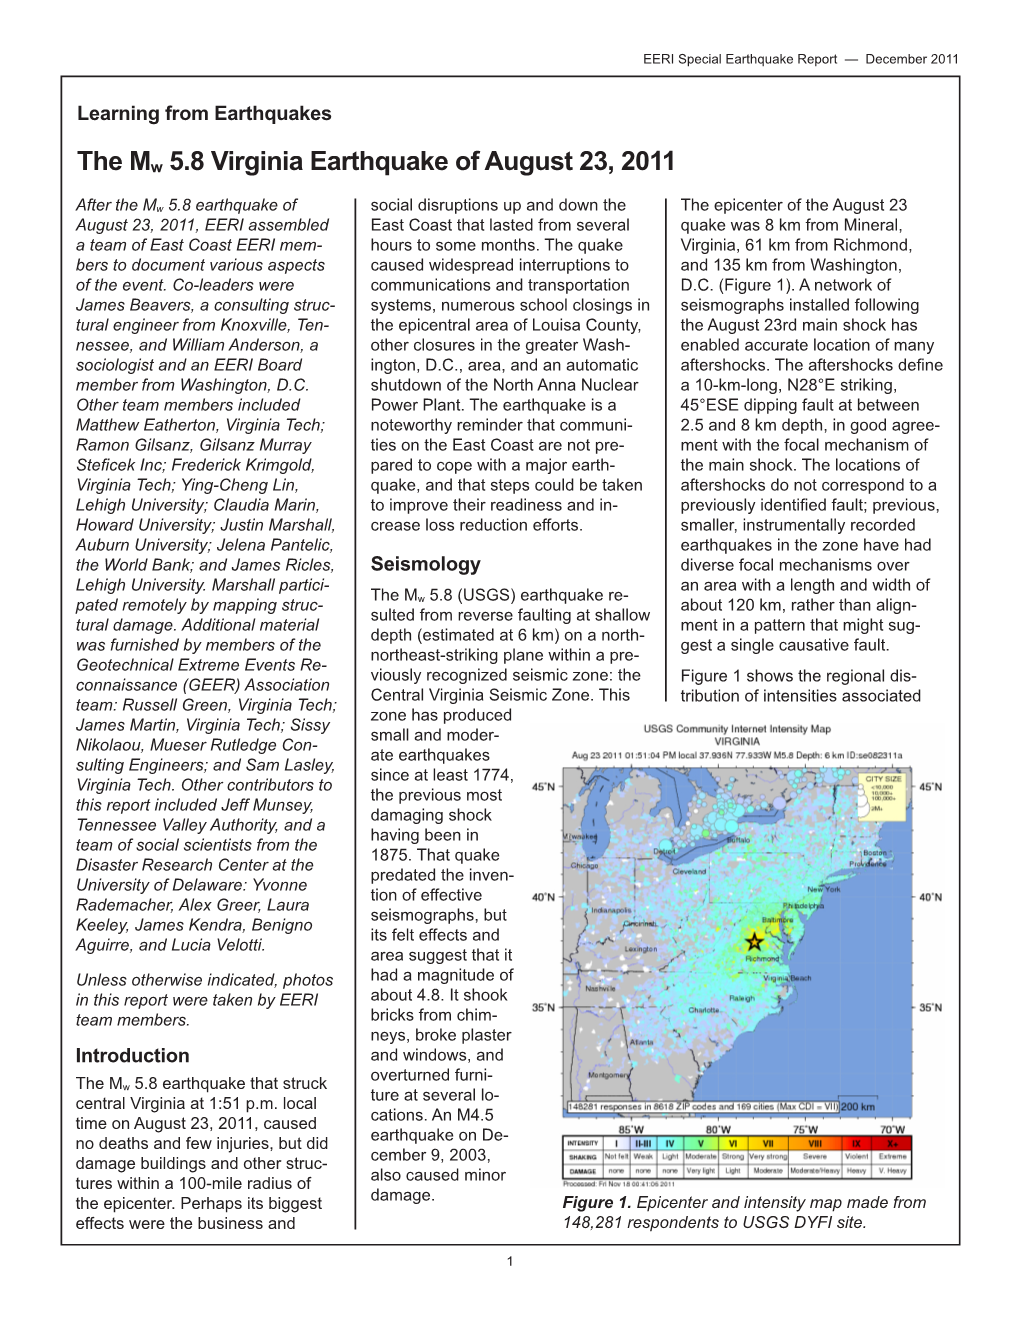 The Mw 5.8 Virginia Earthquake of August 23, 2011 EERI, GEER, And